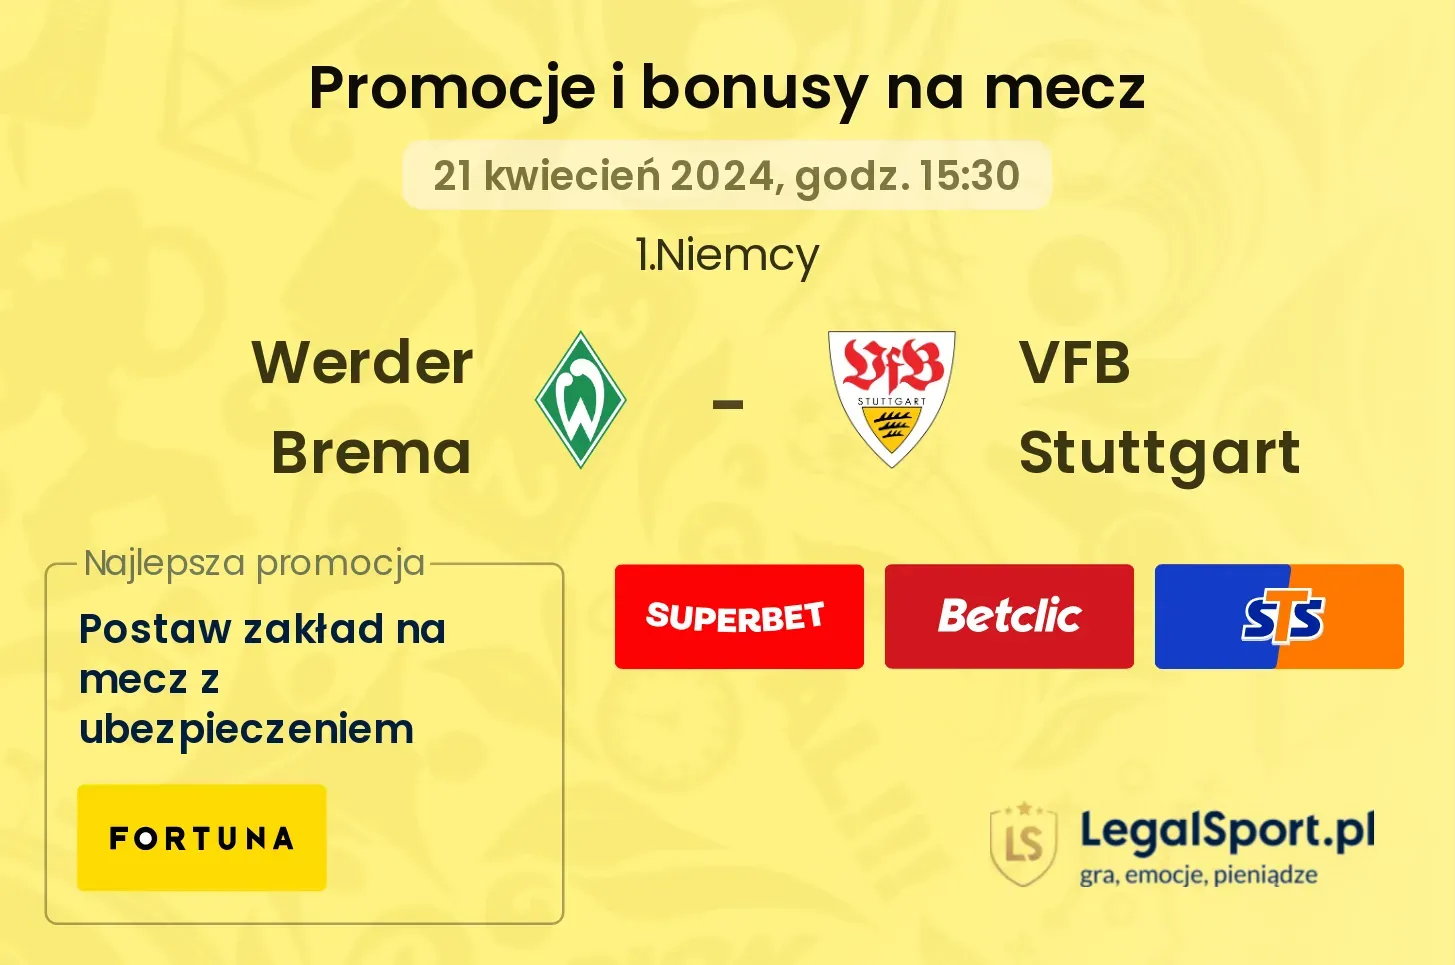 Werder Brema - VFB Stuttgart promocje bonusy na mecz